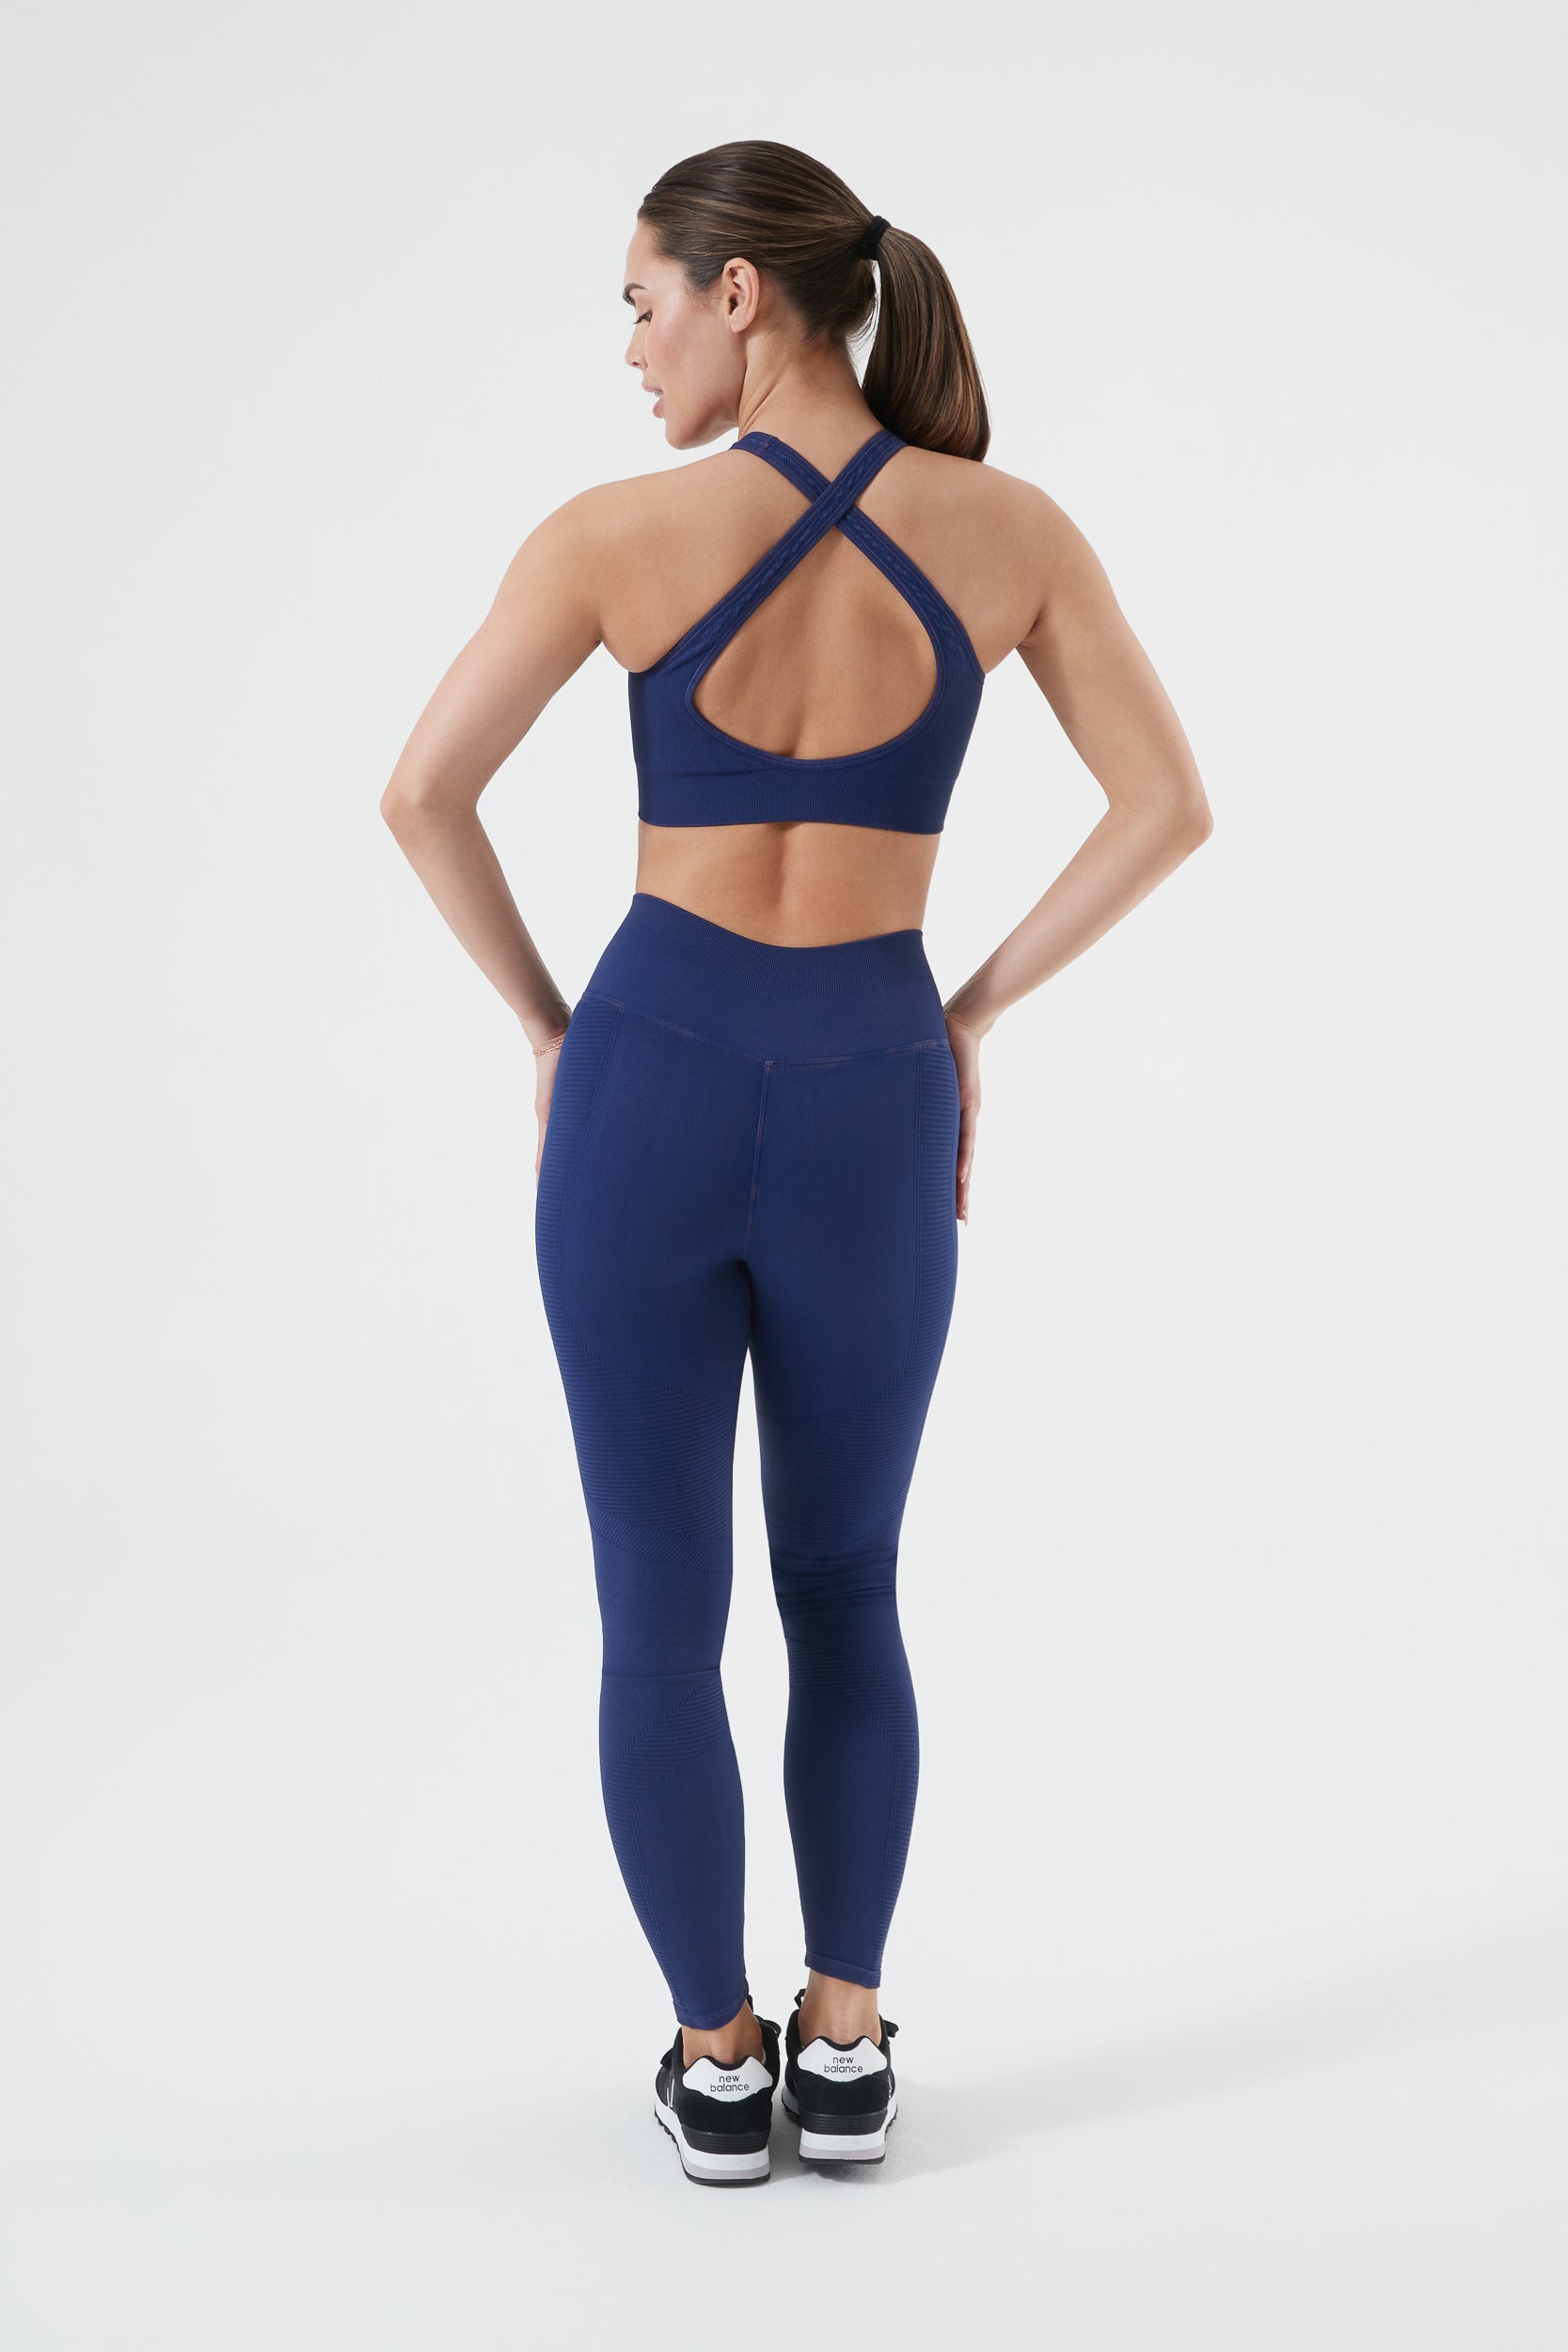 Nix - Neyla Dancewear - Fitness Wear - Sports Clothes